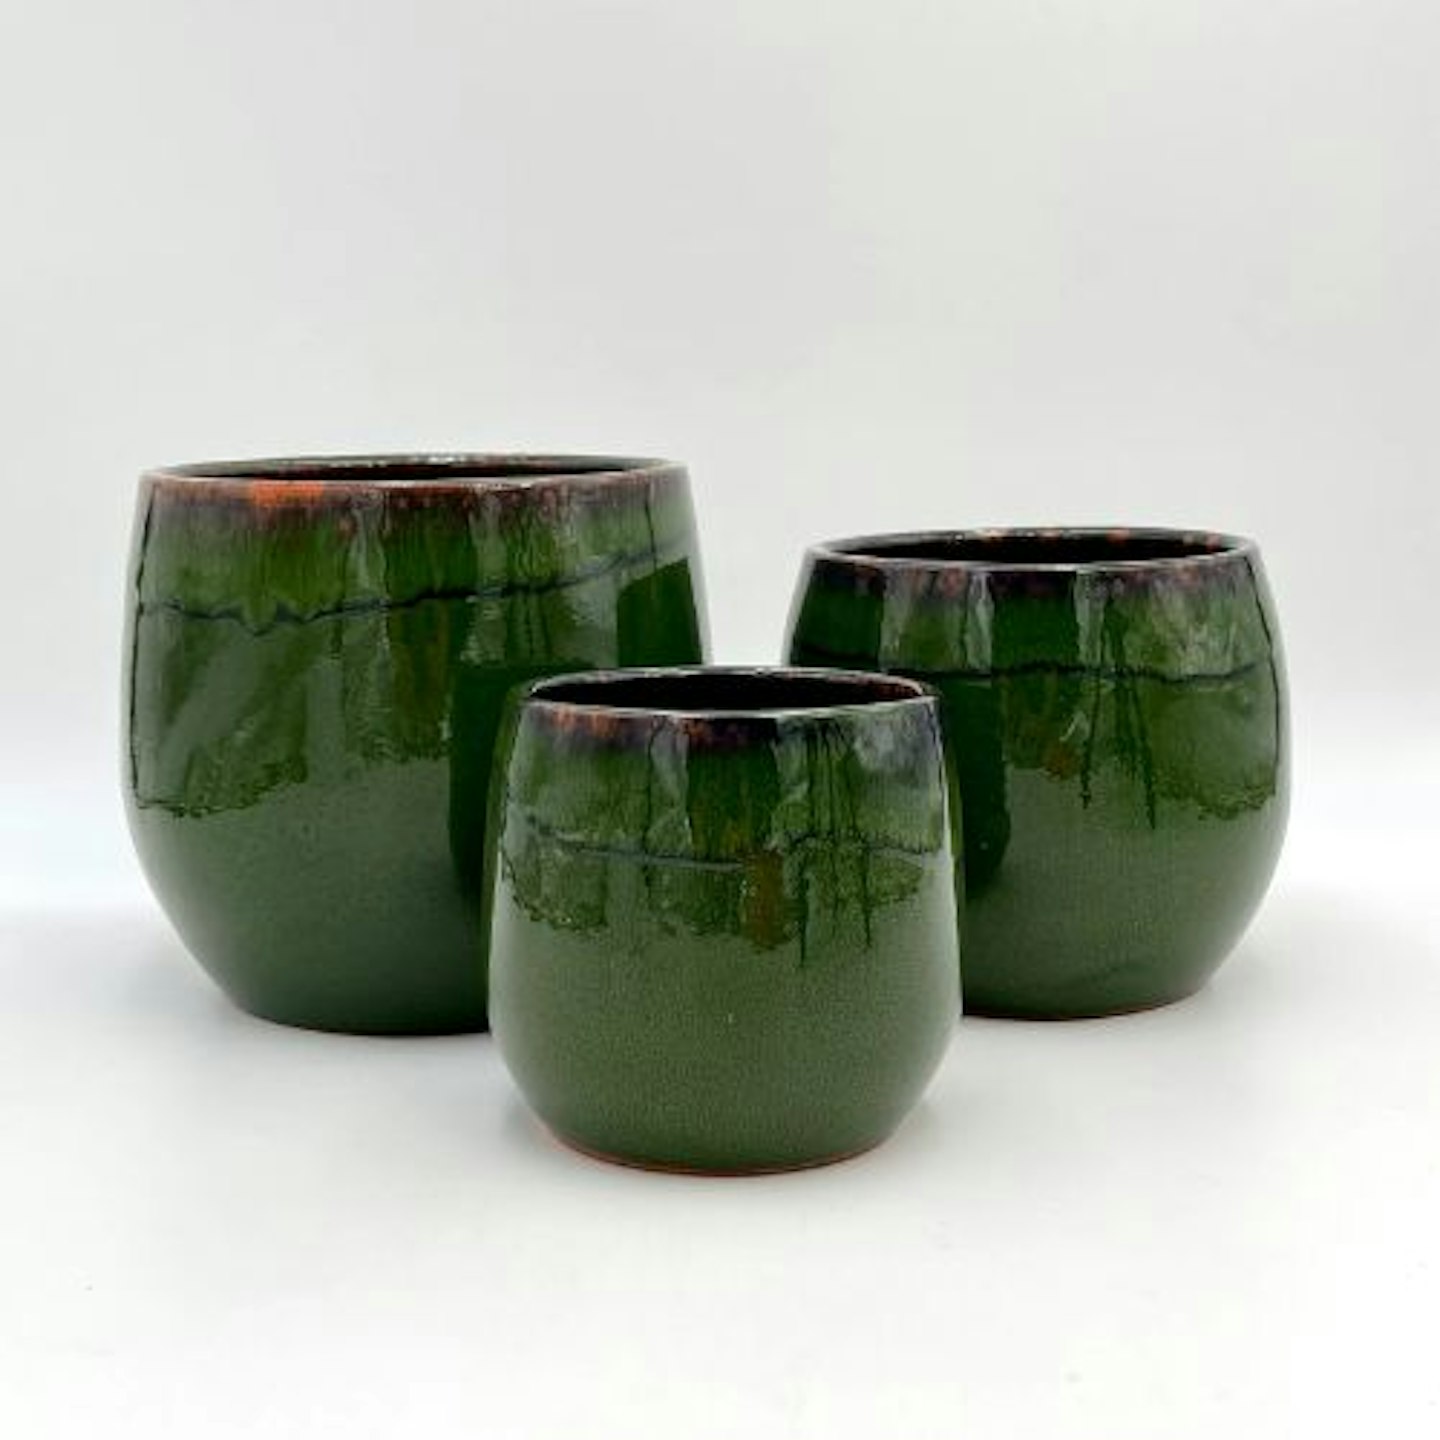 Charlotte Emerald Green, Glossy Glazed Well Made Ceramic Plant Pot